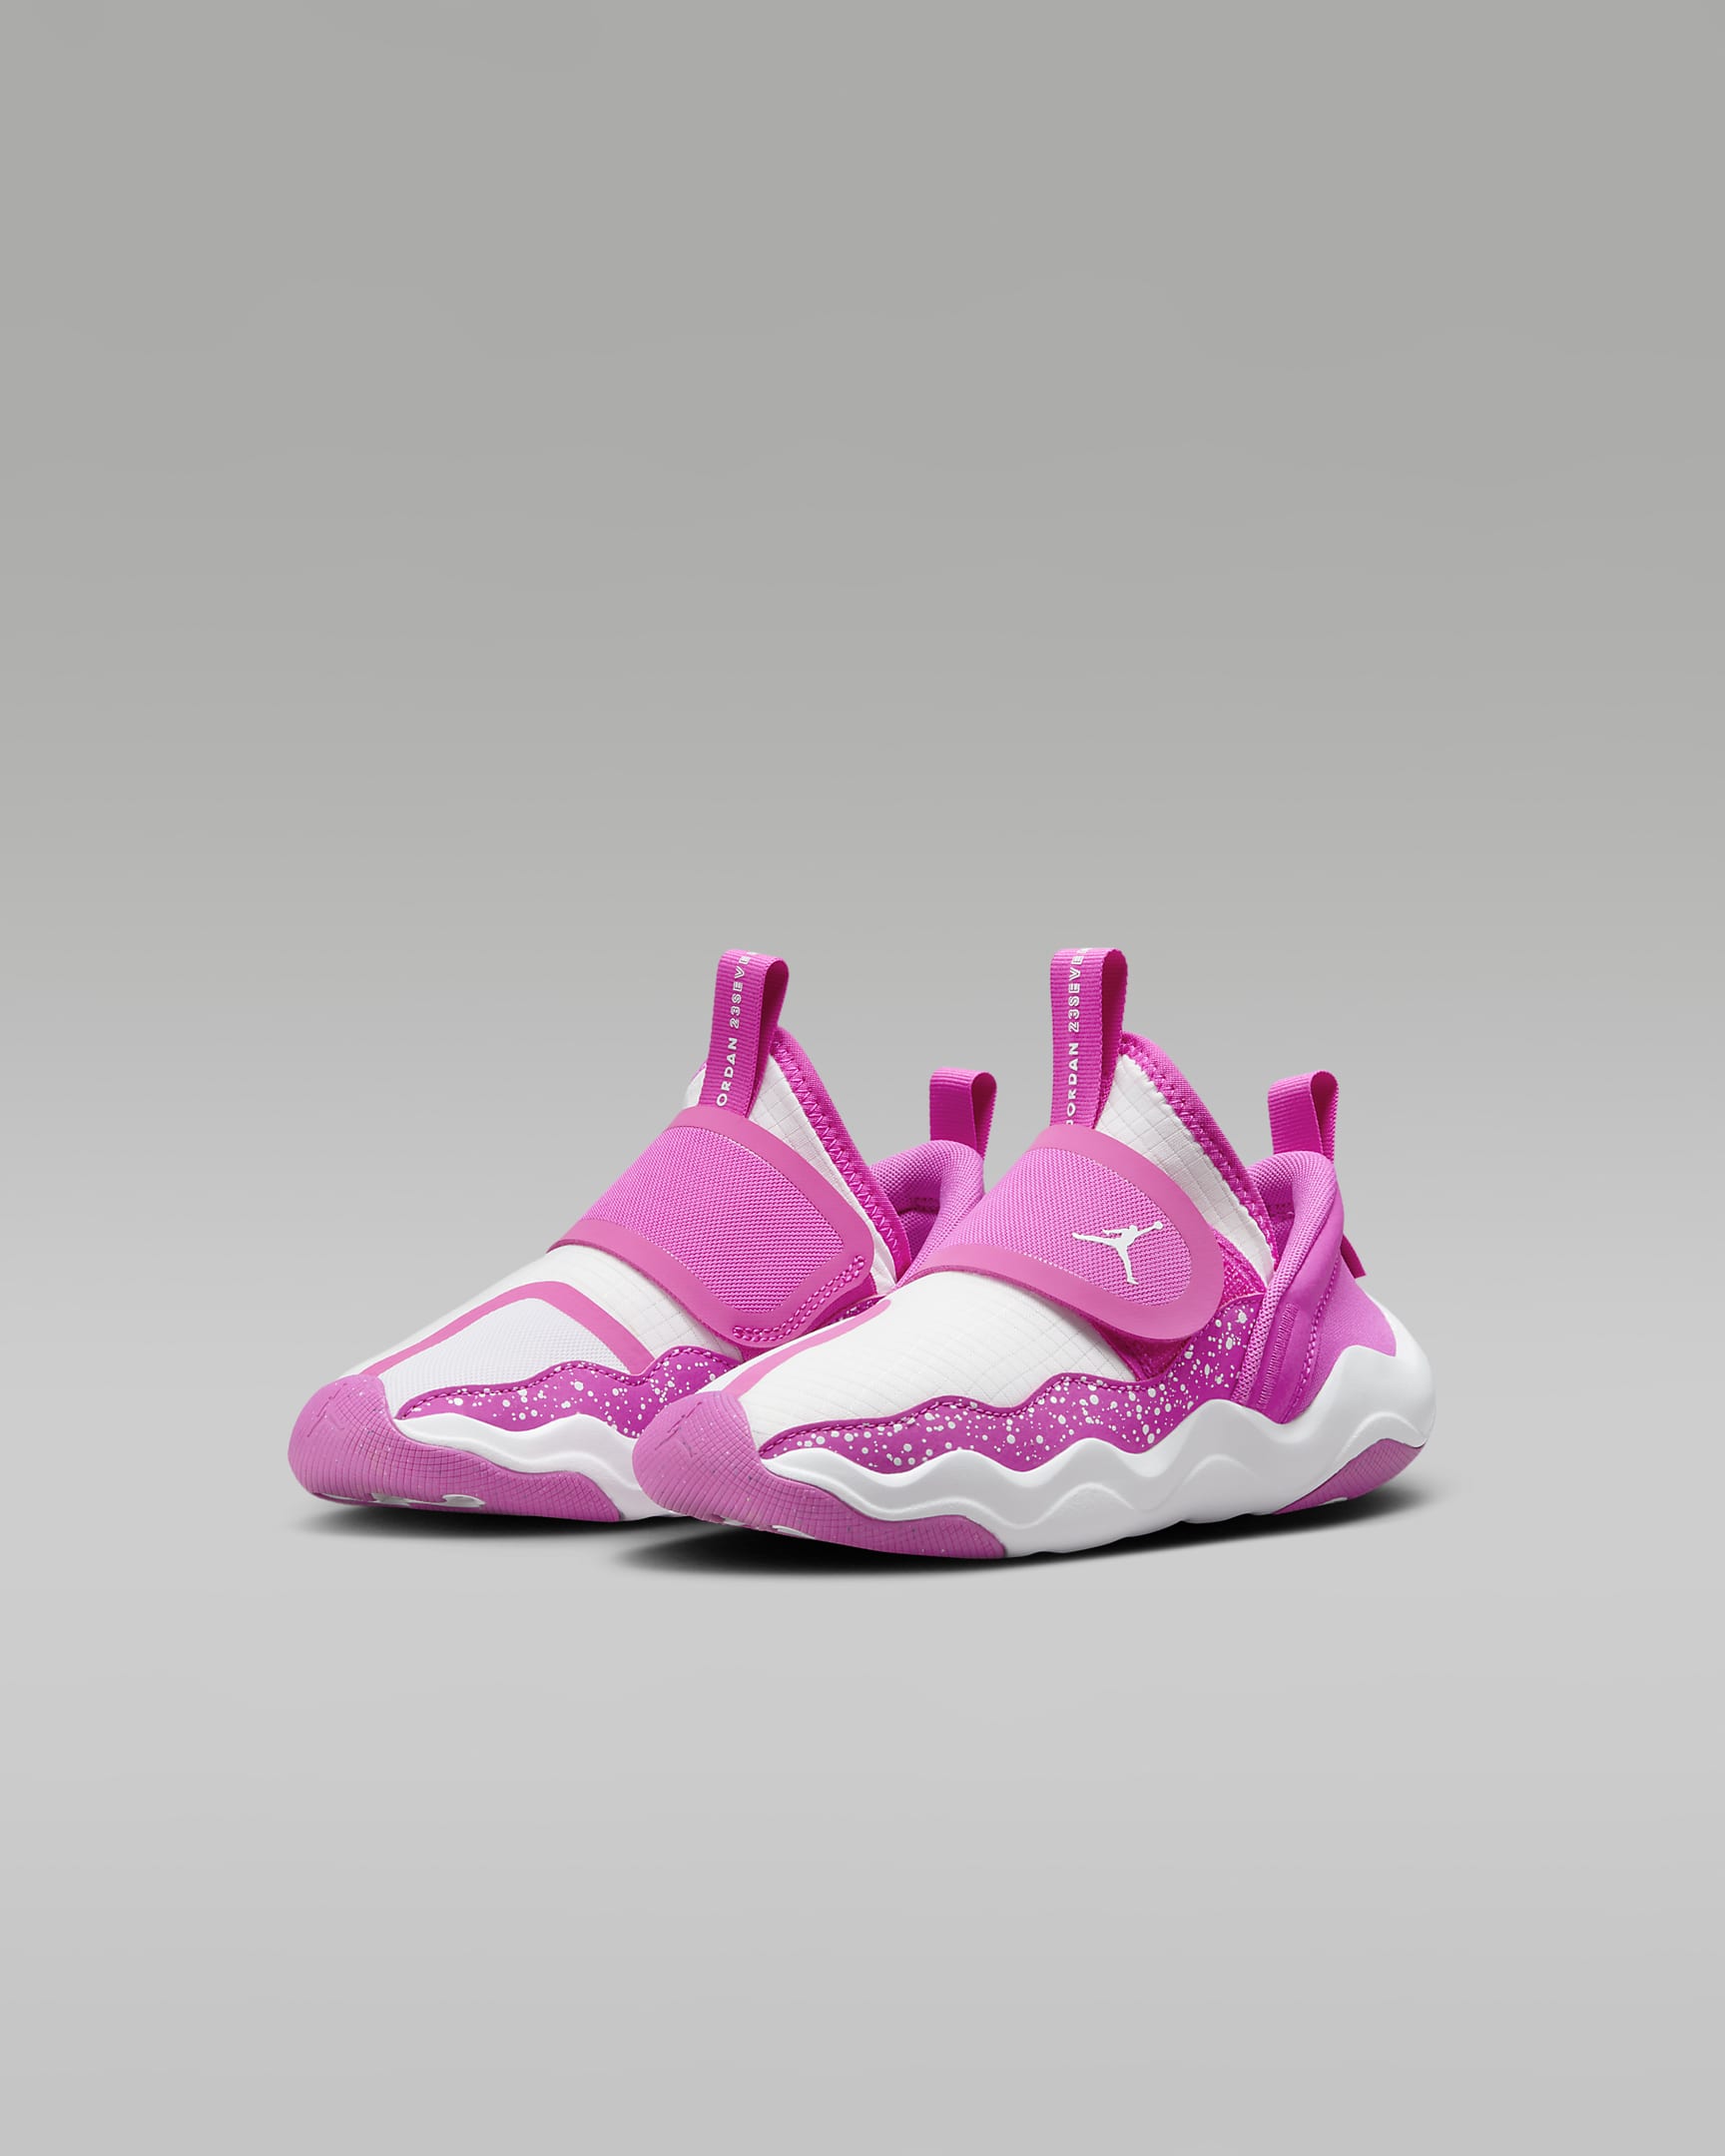 Jordan 23/7 Little Kids' Shoes - Fire Pink/Iris Whisper/White